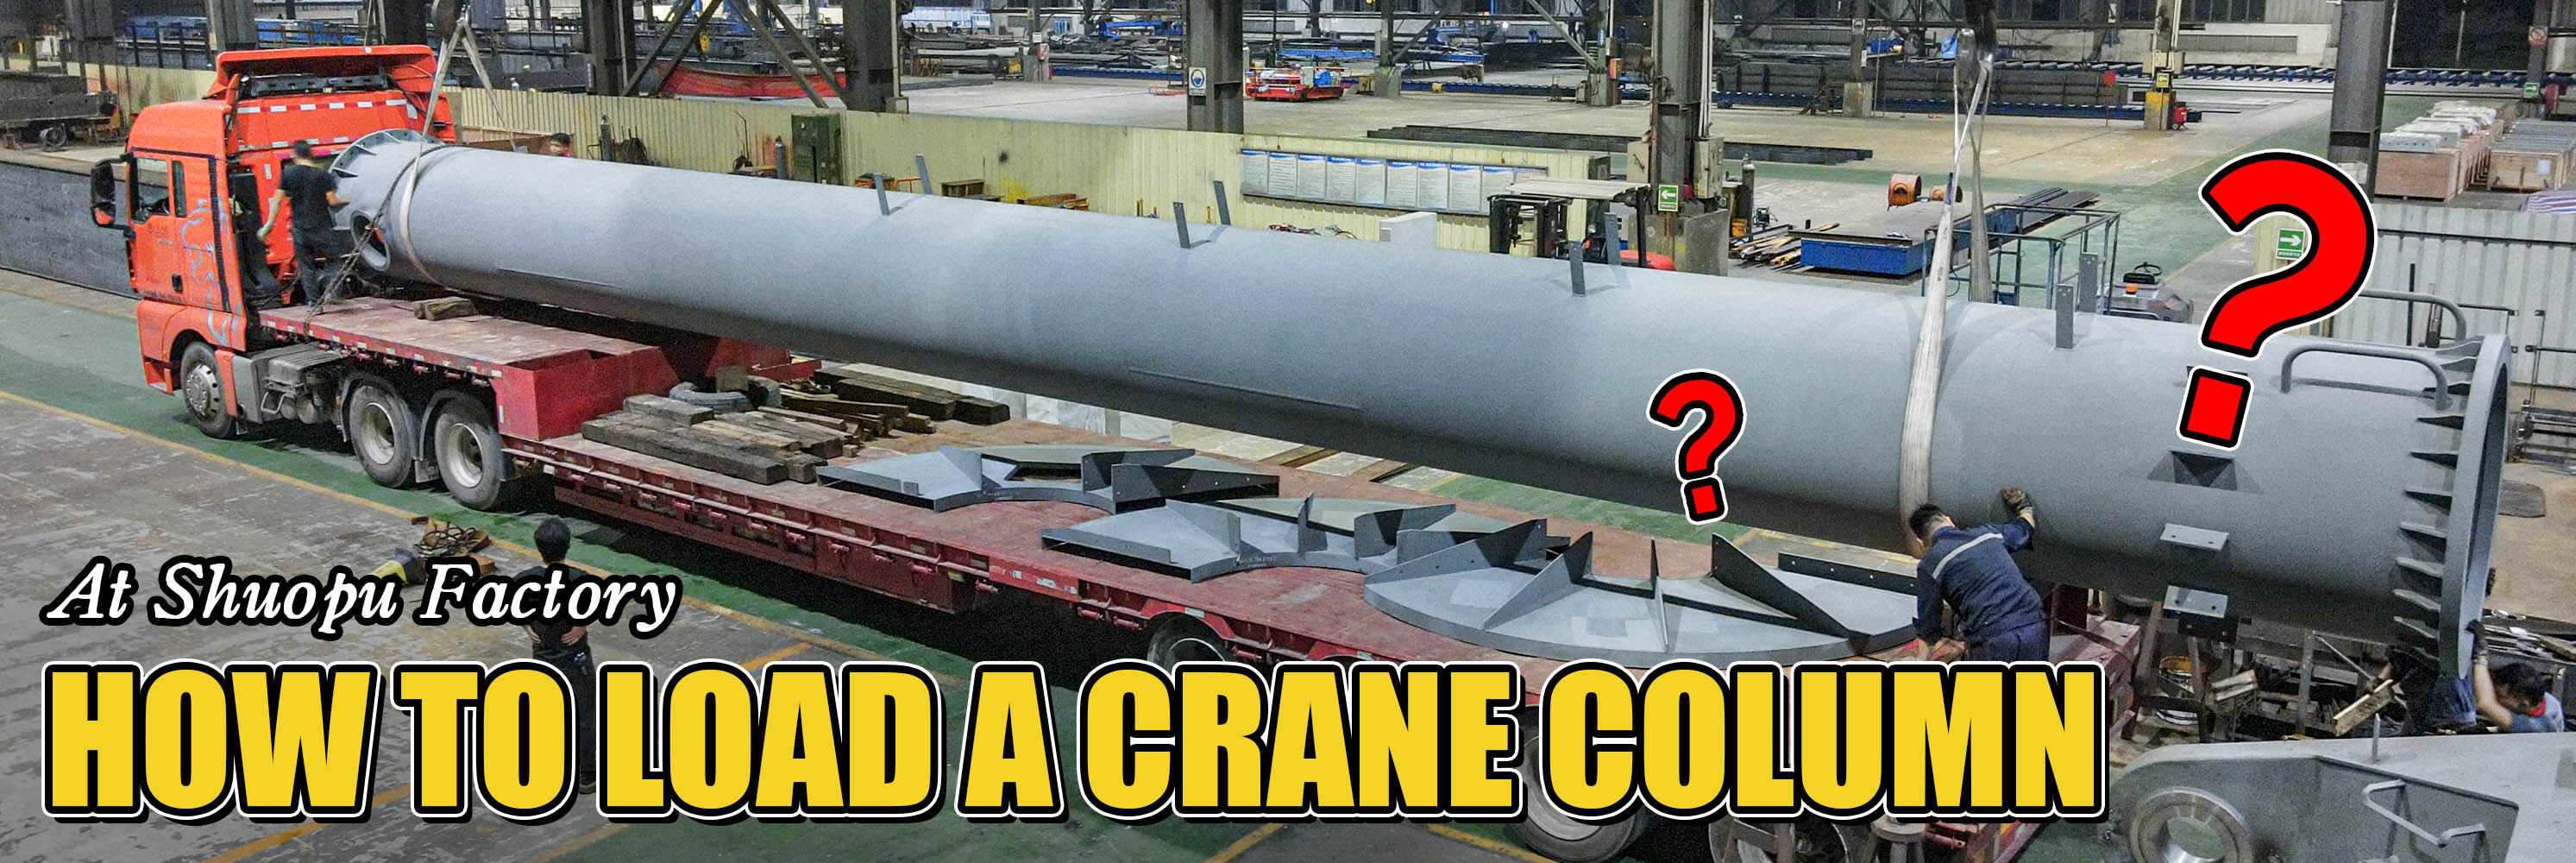 How to Load Crane Column?